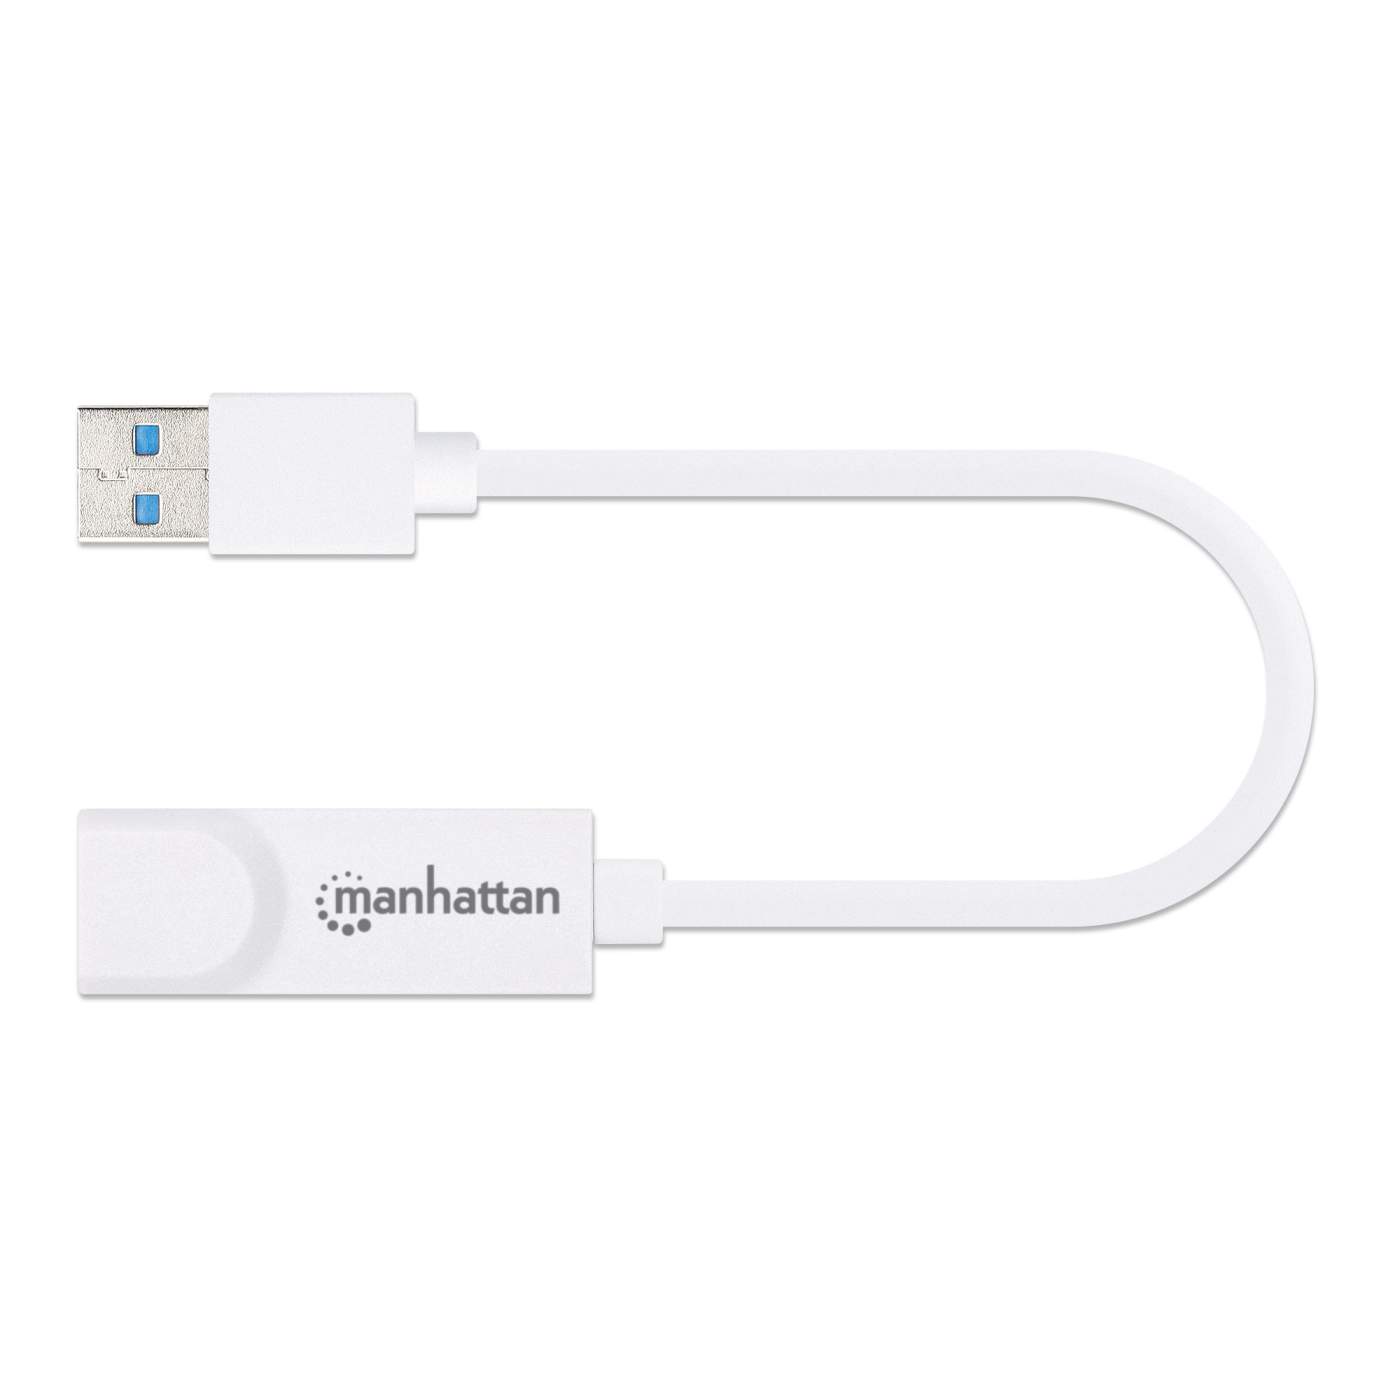 USB 3.0 to Gigabit Network Adapter Image 4